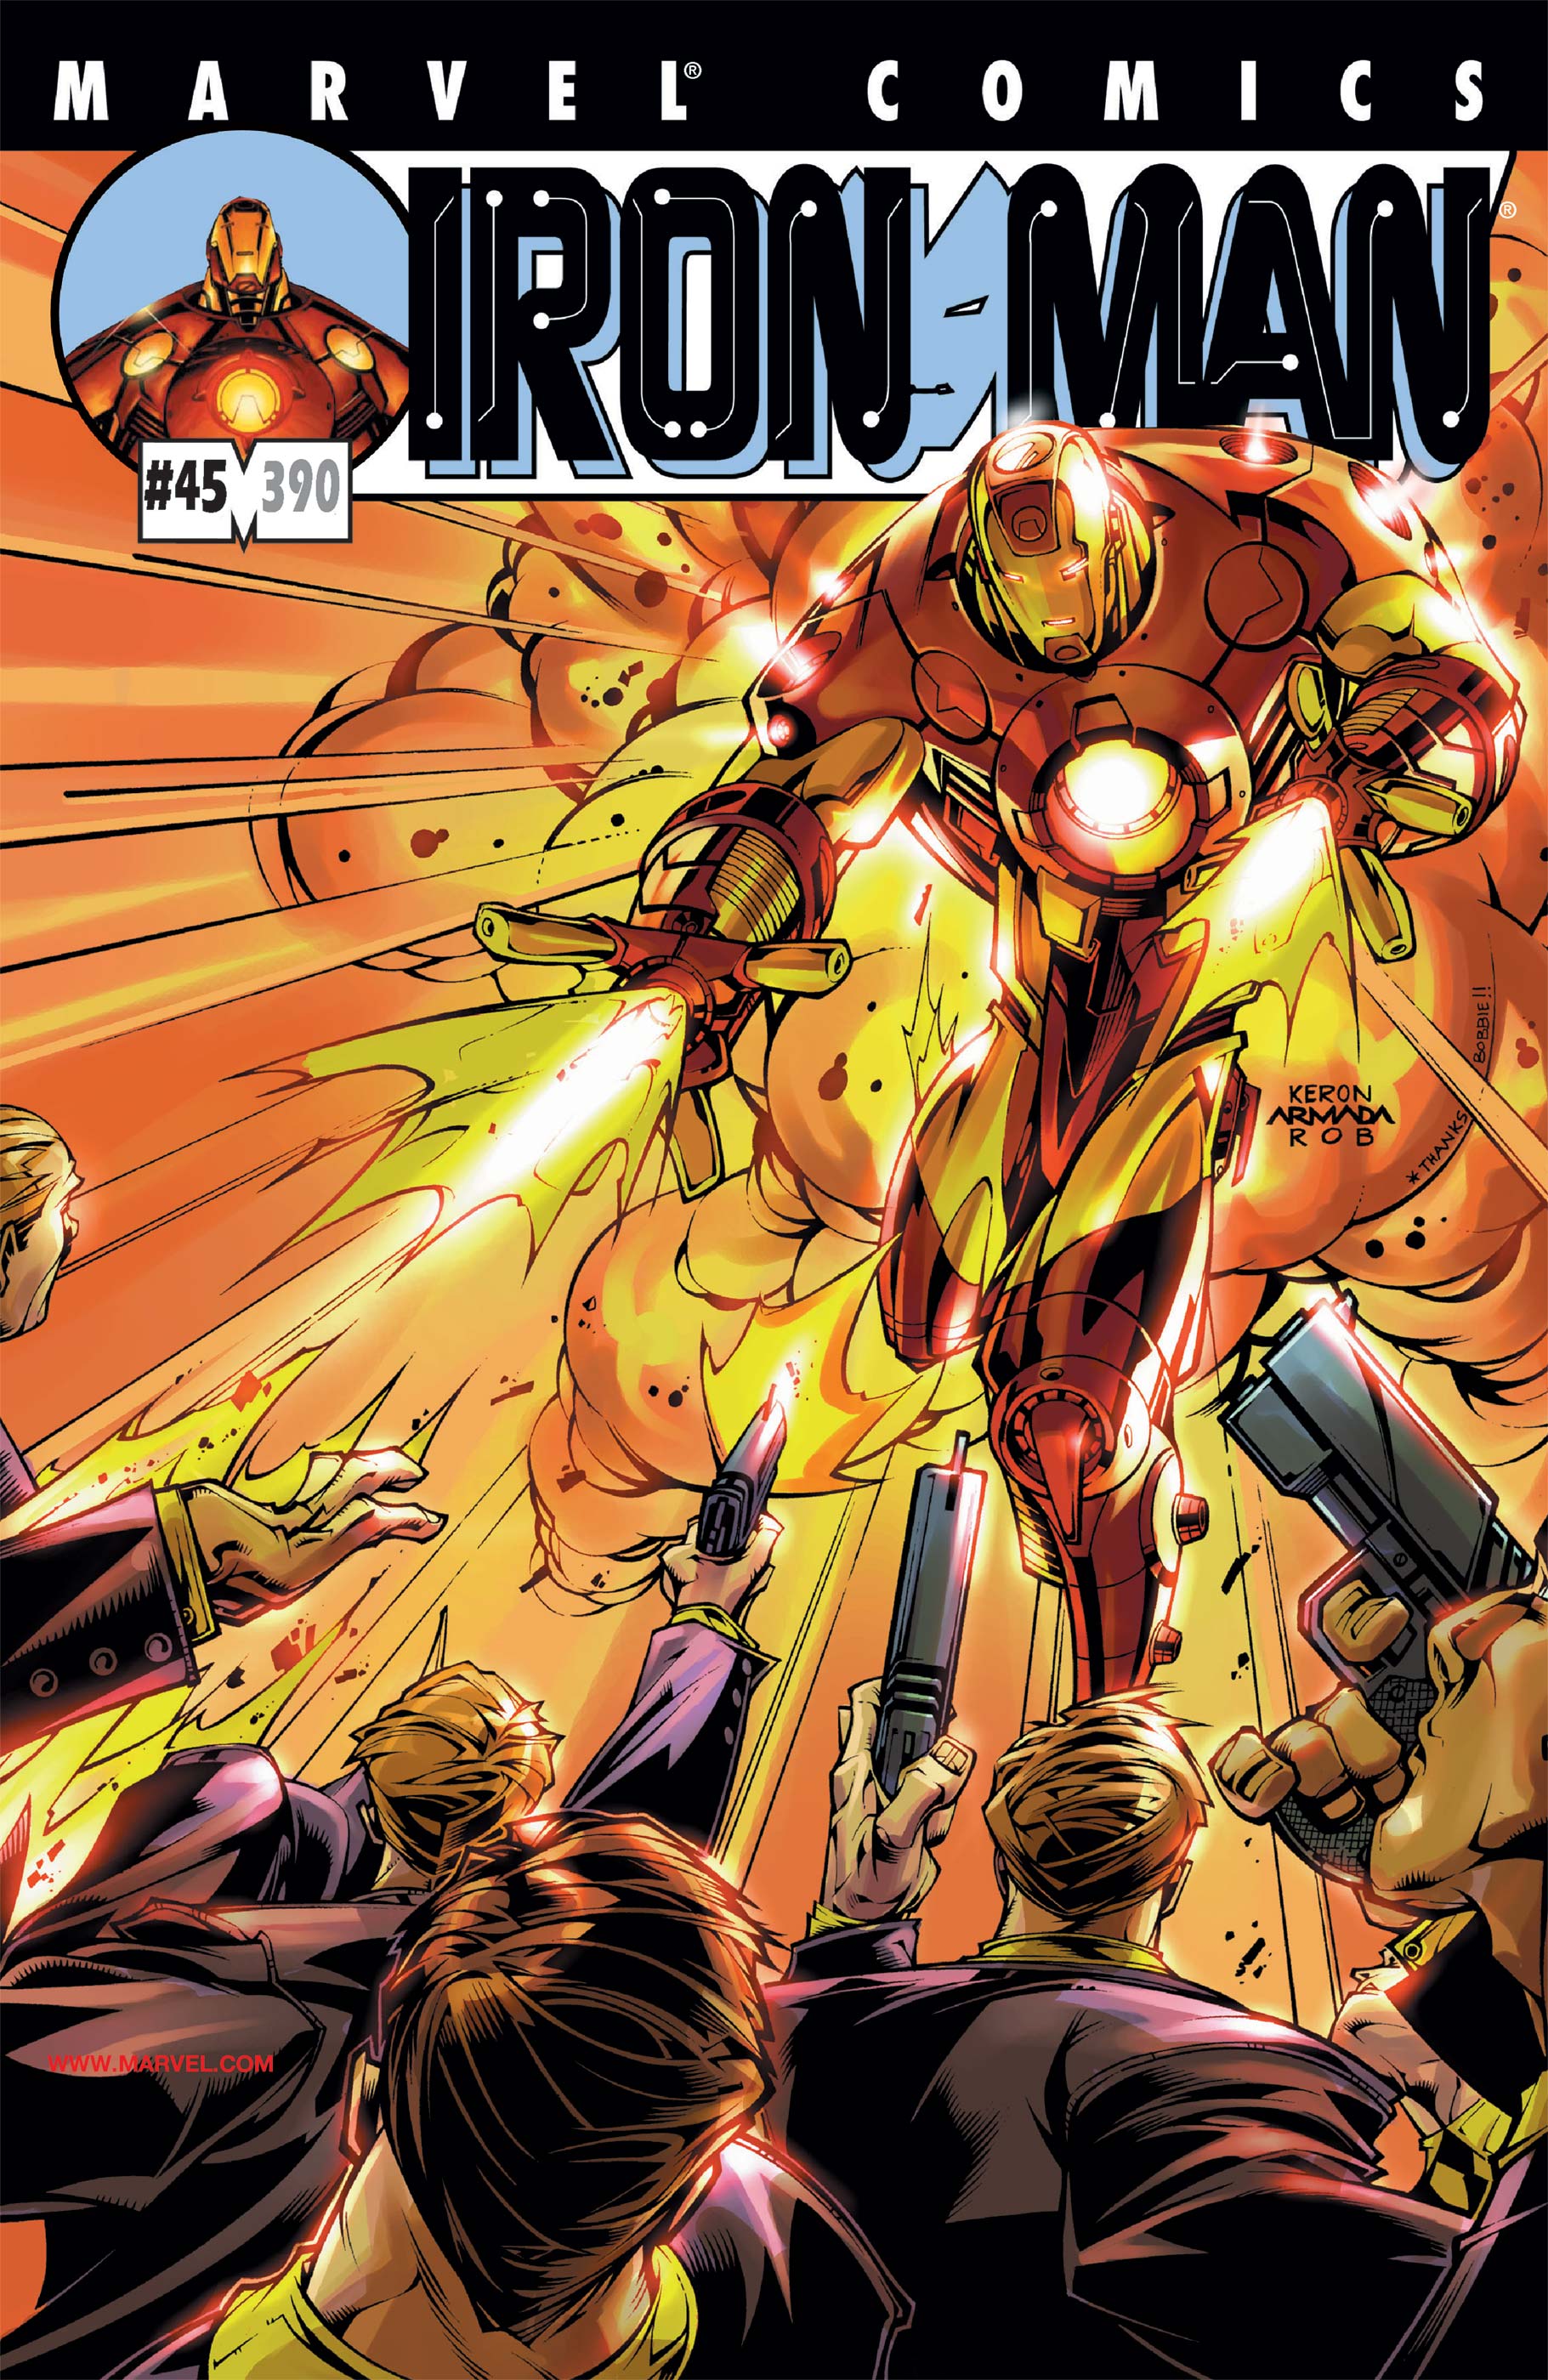 Iron Man (1998) #45